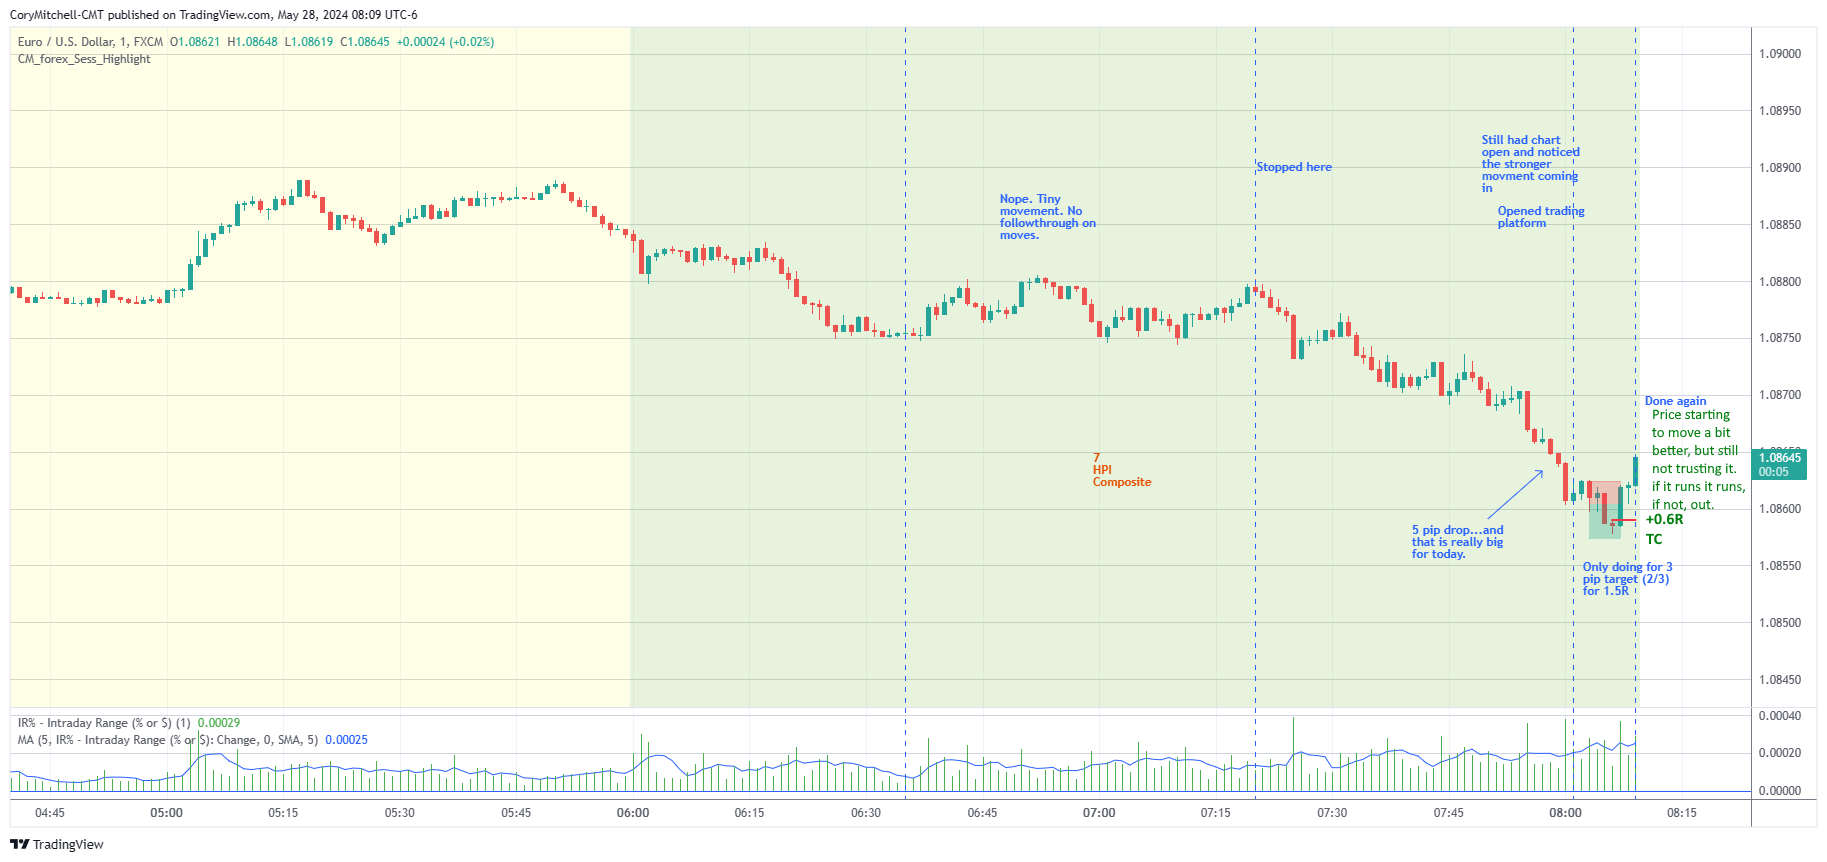 EURUSD 1 minute chart day trading examples May 28 2024